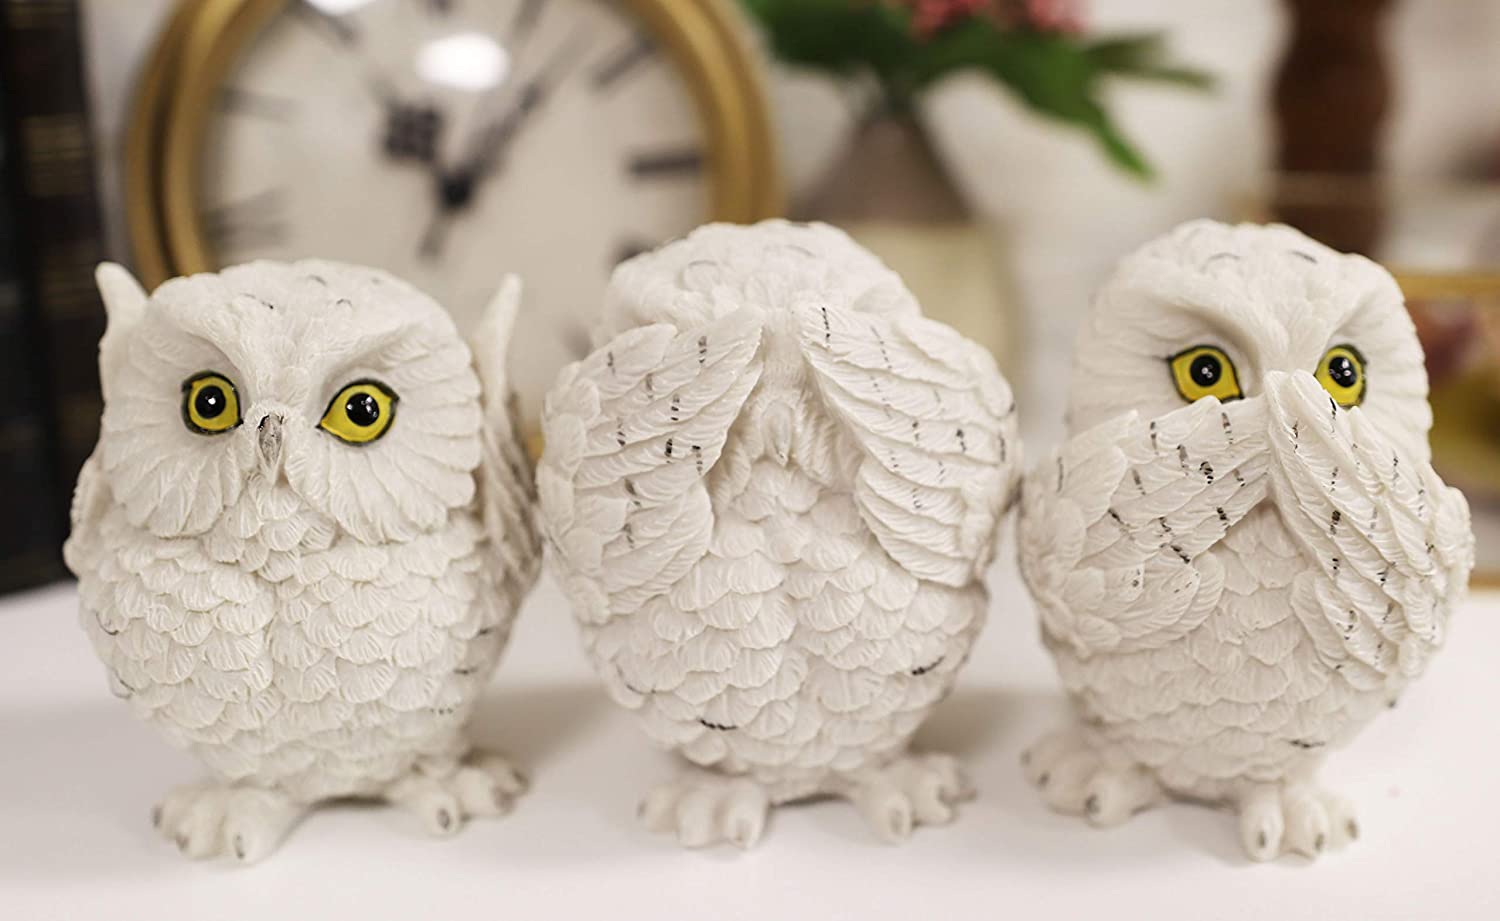 Ebros Gift Ebros See Hear Speak No Evil Fat Baby White Owls Figurines Set of 3 Mini Decor